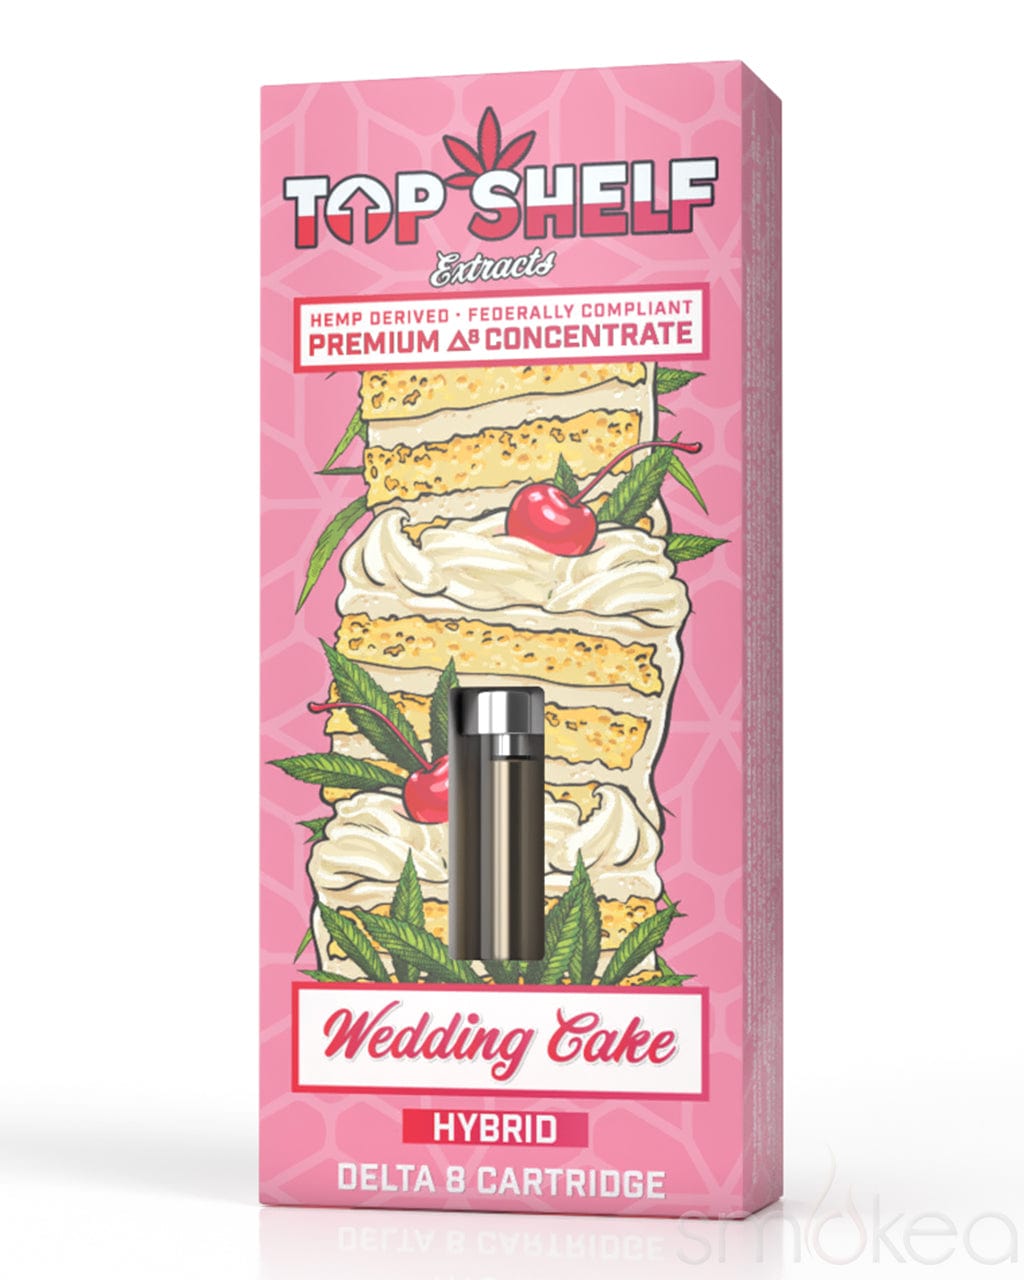 Top Shelf Hemp Delta 8 Vape Cartridge - Wedding Cake